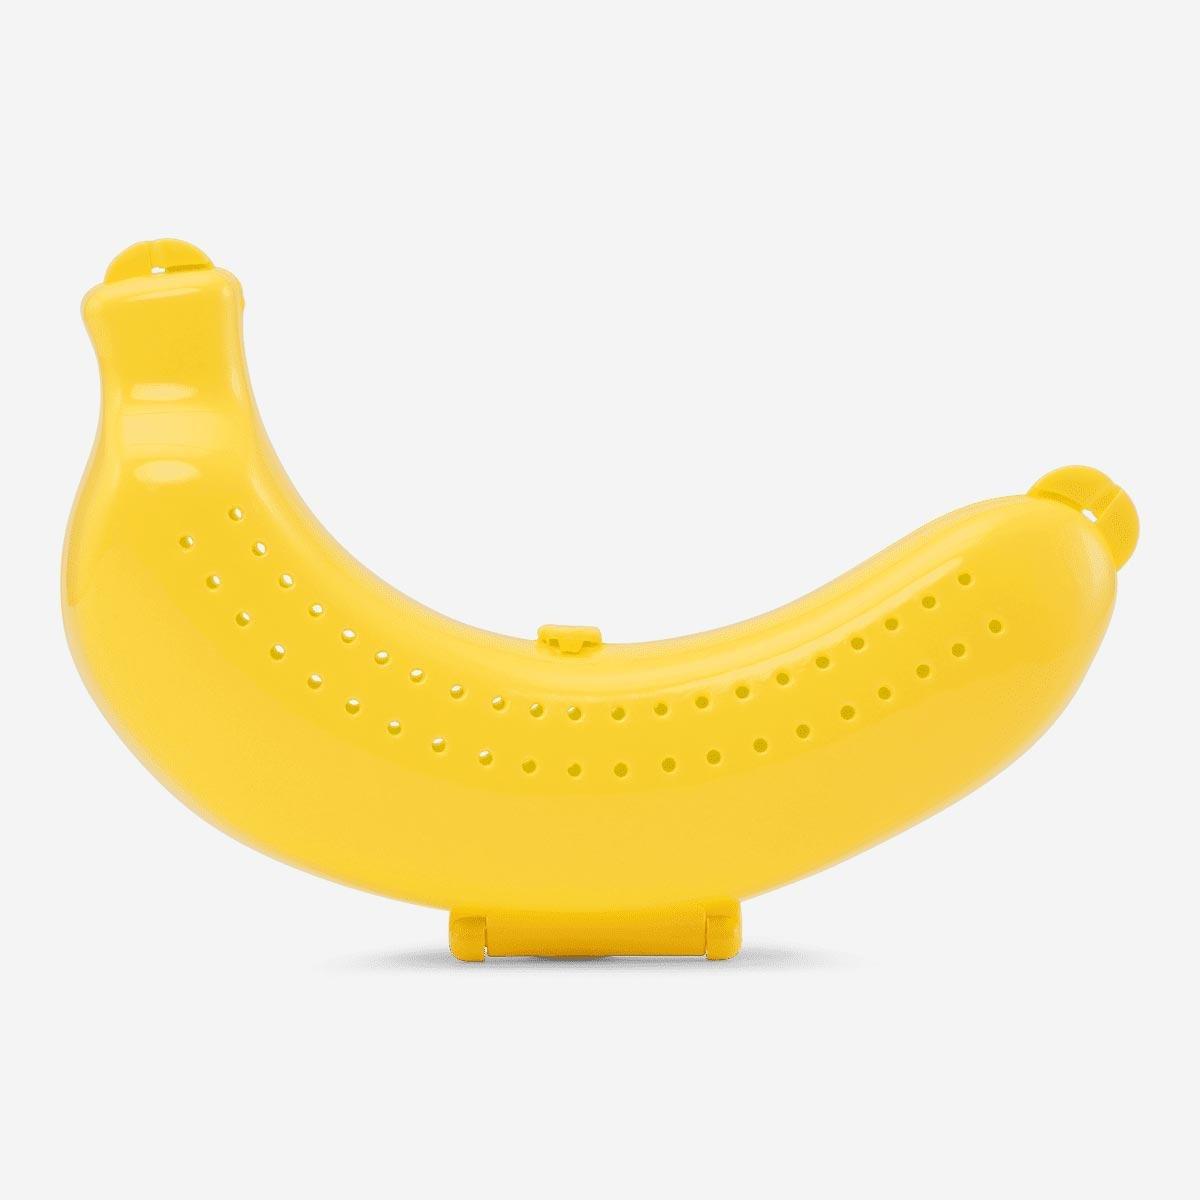 Yellow banana case